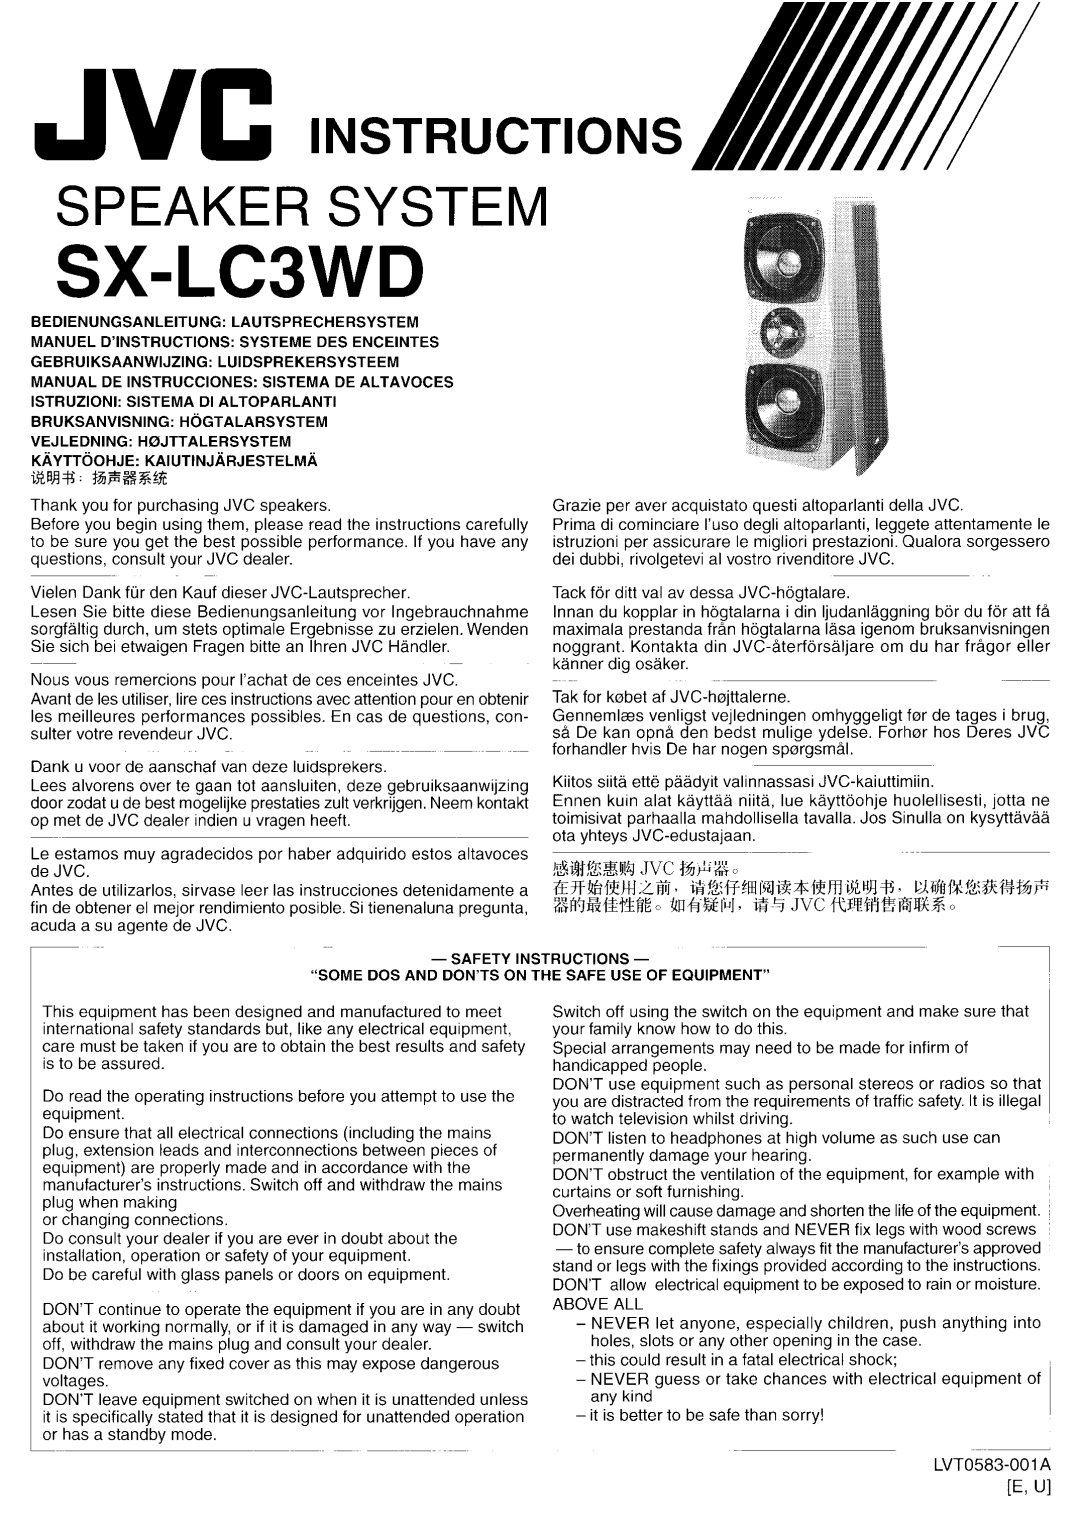 JVC SX-LC3WD manual 